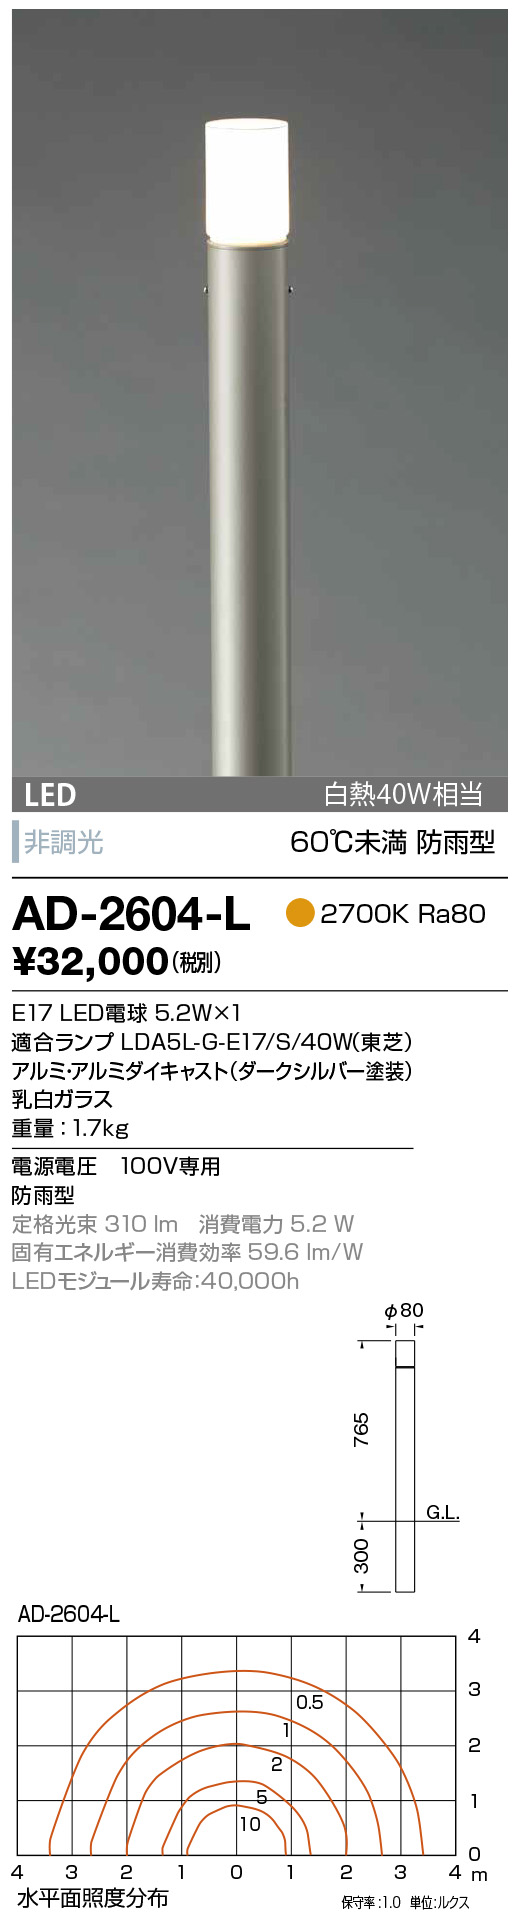 AD-2604-L(山田照明) 商品詳細 ～ 照明器具・換気扇他、電設資材販売のブライト